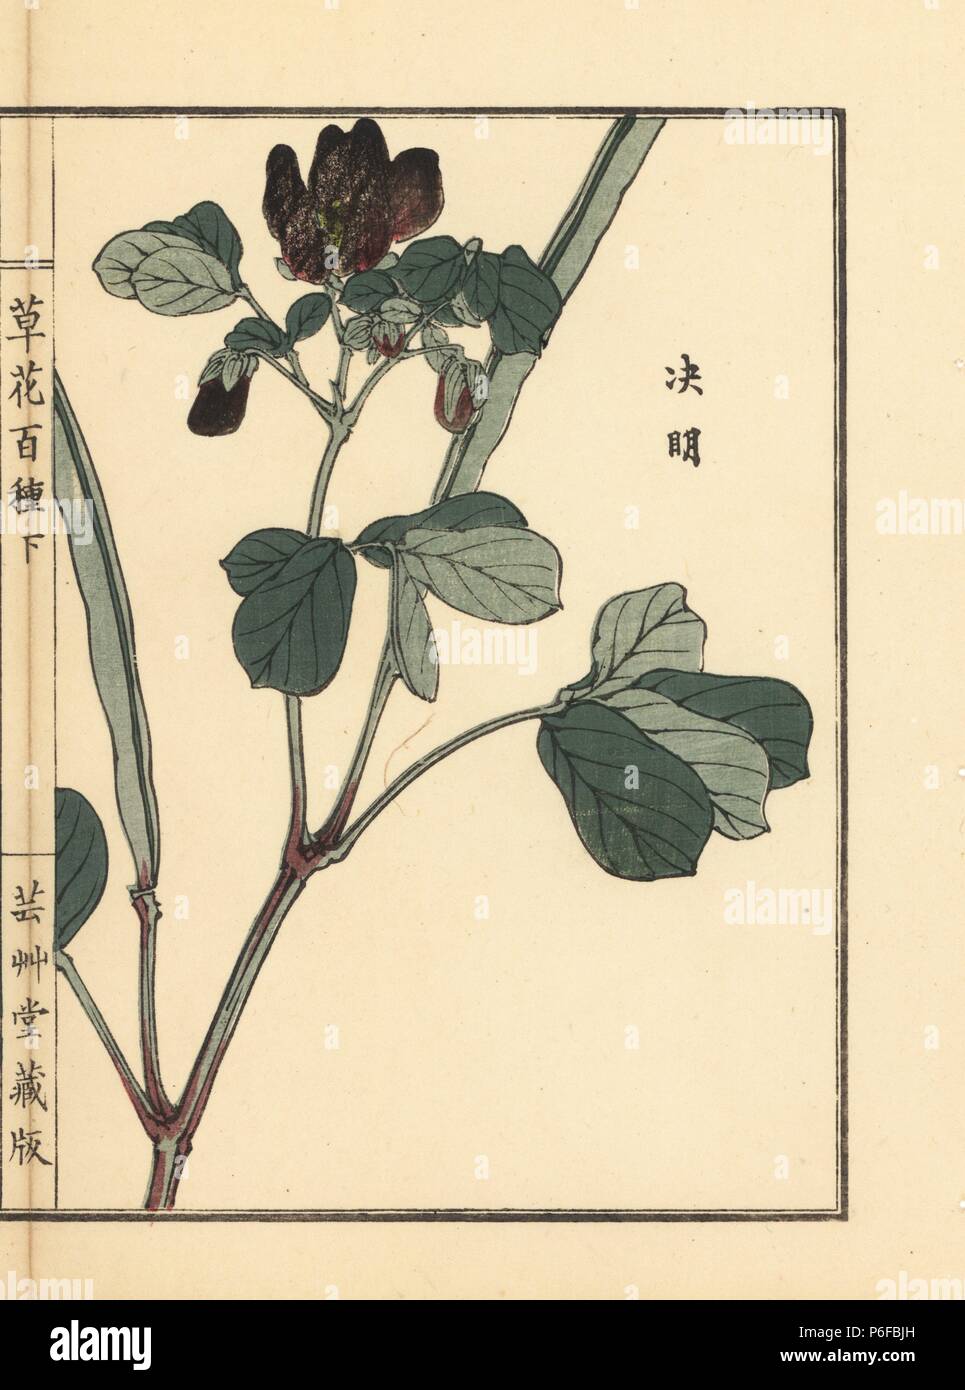 Ketsumei, Chinese senna or sicklepod, Senna obtusifolia. Handcoloured woodblock print by Kono Bairei from Kusa Bana Hyakushu (One Hundred Varieties of Flowers), Tokyo, Yamada, 1901. Stock Photo